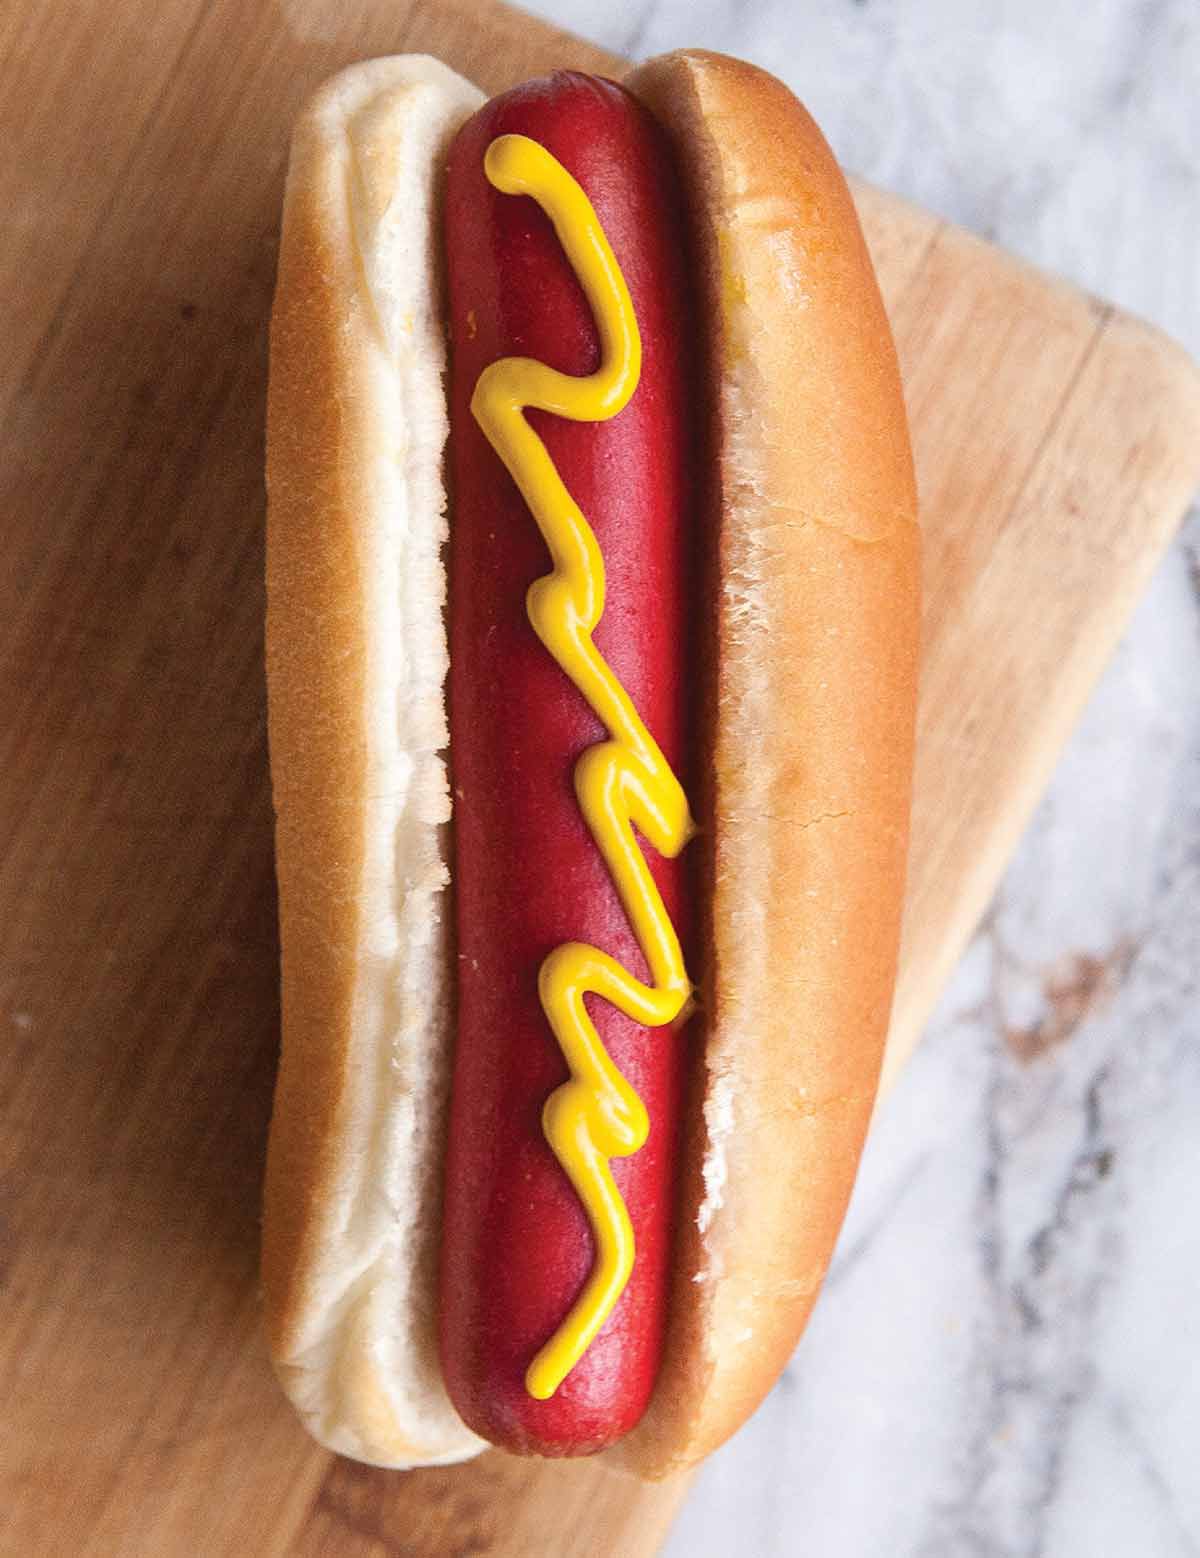 Basic Air Fryer Hot Dogs 